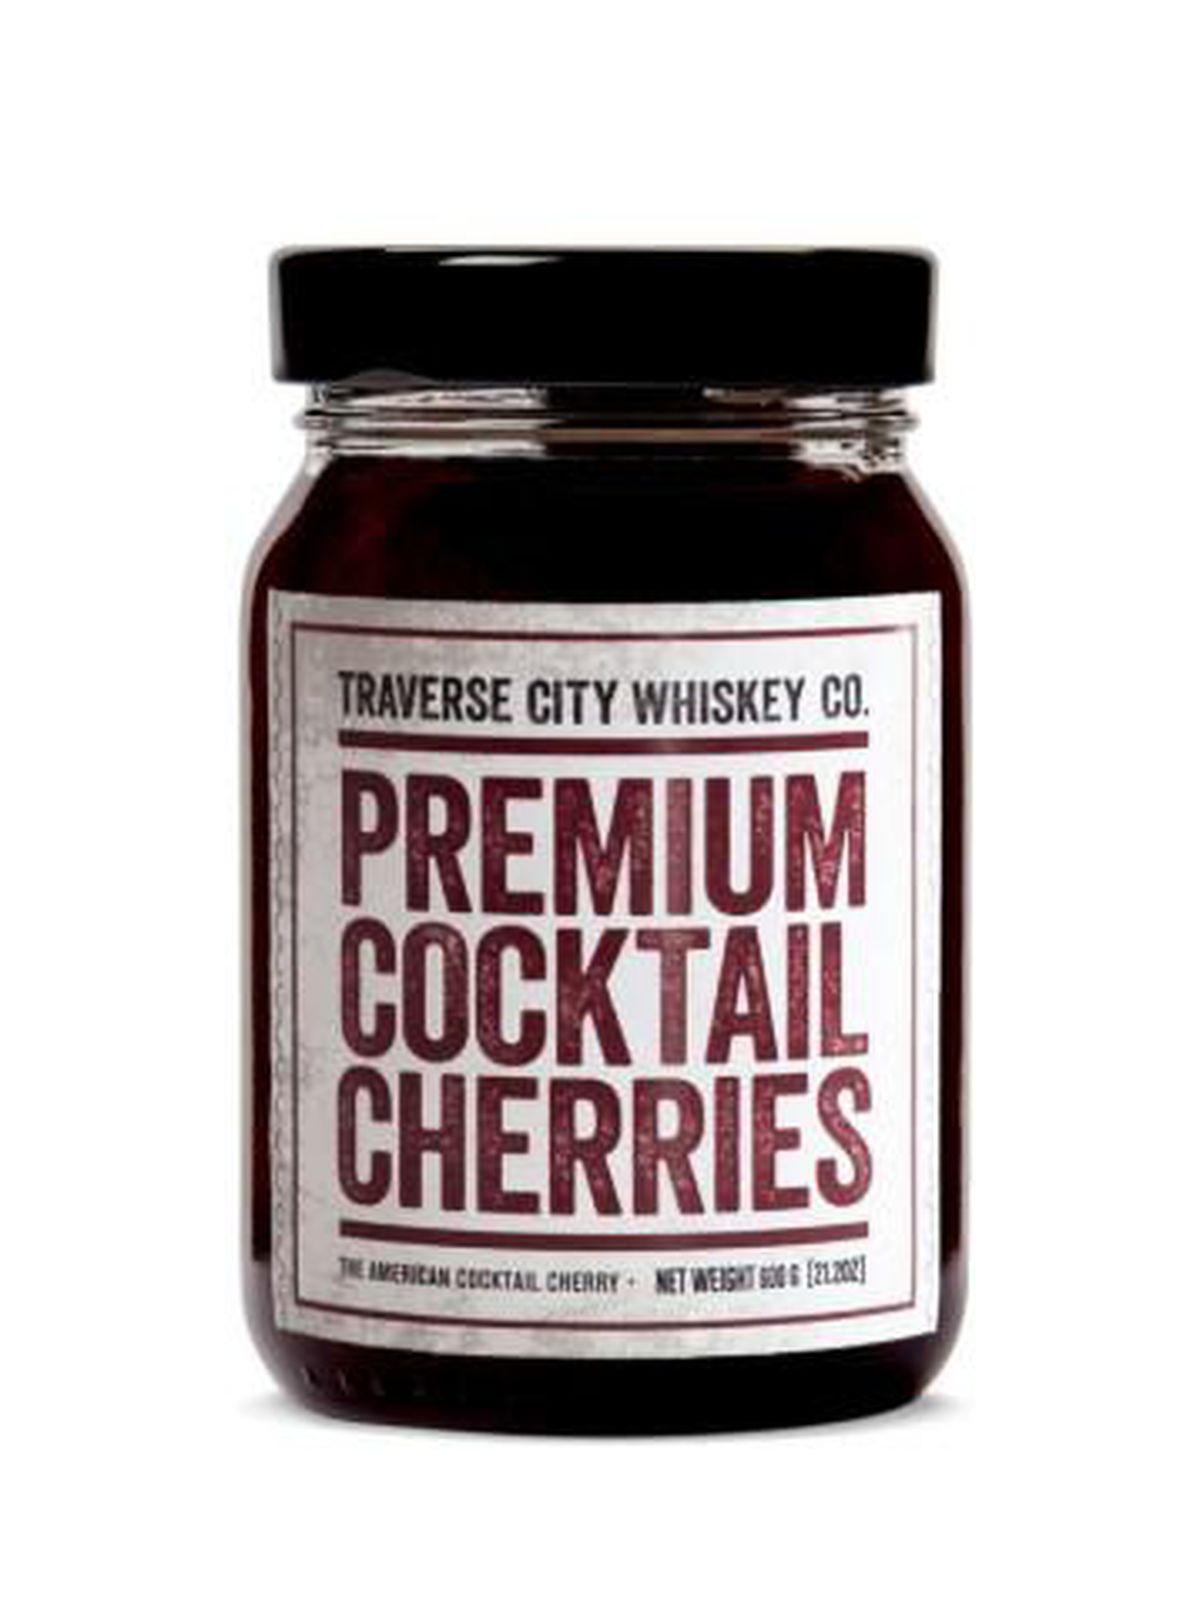 A jar of premium cocktail cherries